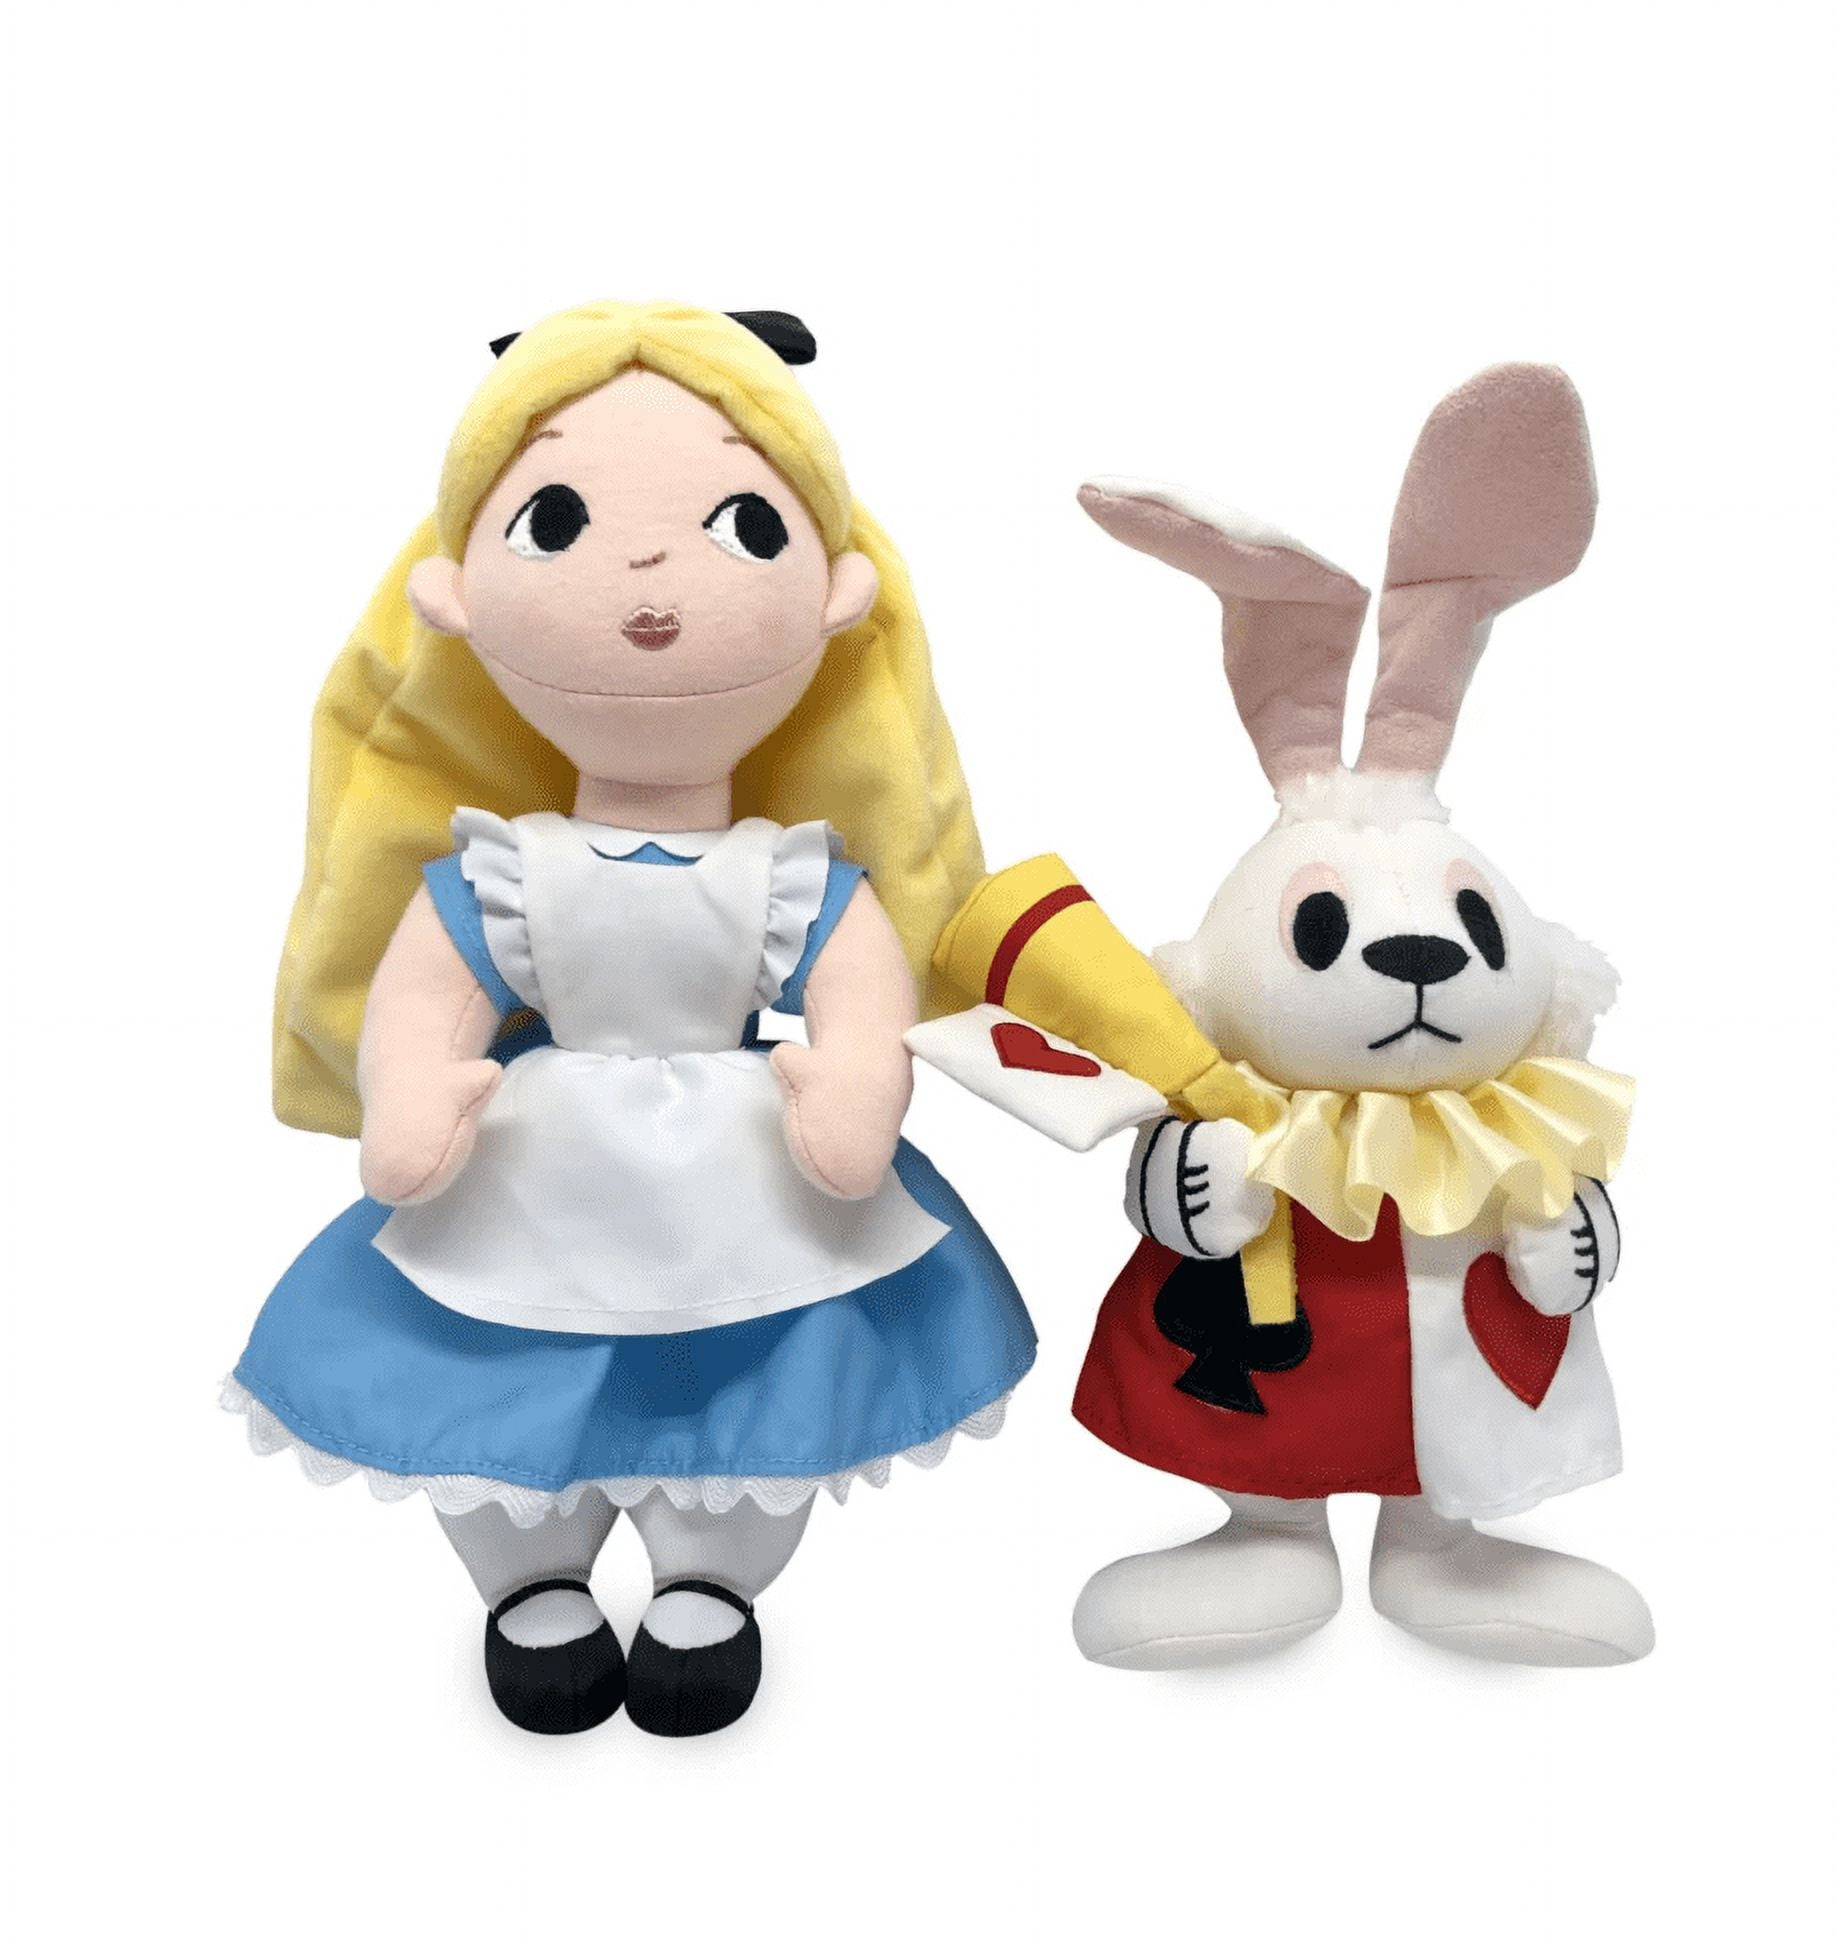 Disney 70th Anniversary Alice in Wonderland Exclusive 11-Inch Plush Set